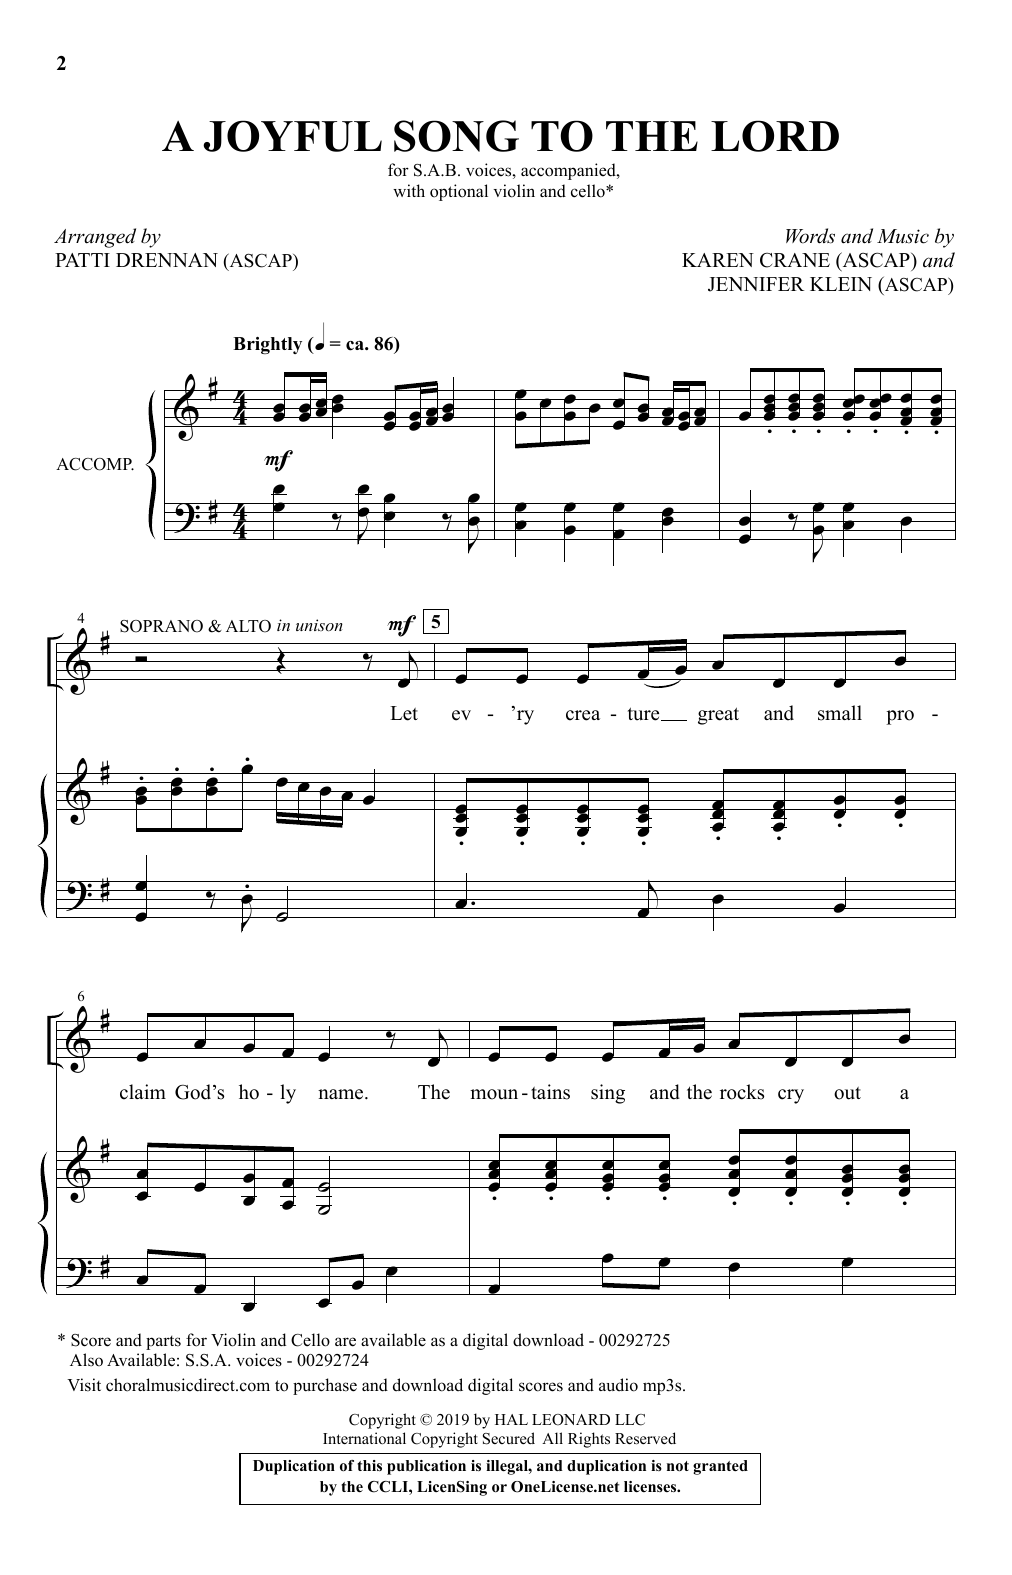 Karen Crane & Jennifer Klein A Joyful Song To The Lord (arr. Patti Drennan) Sheet Music Notes & Chords for SAB Choir - Download or Print PDF